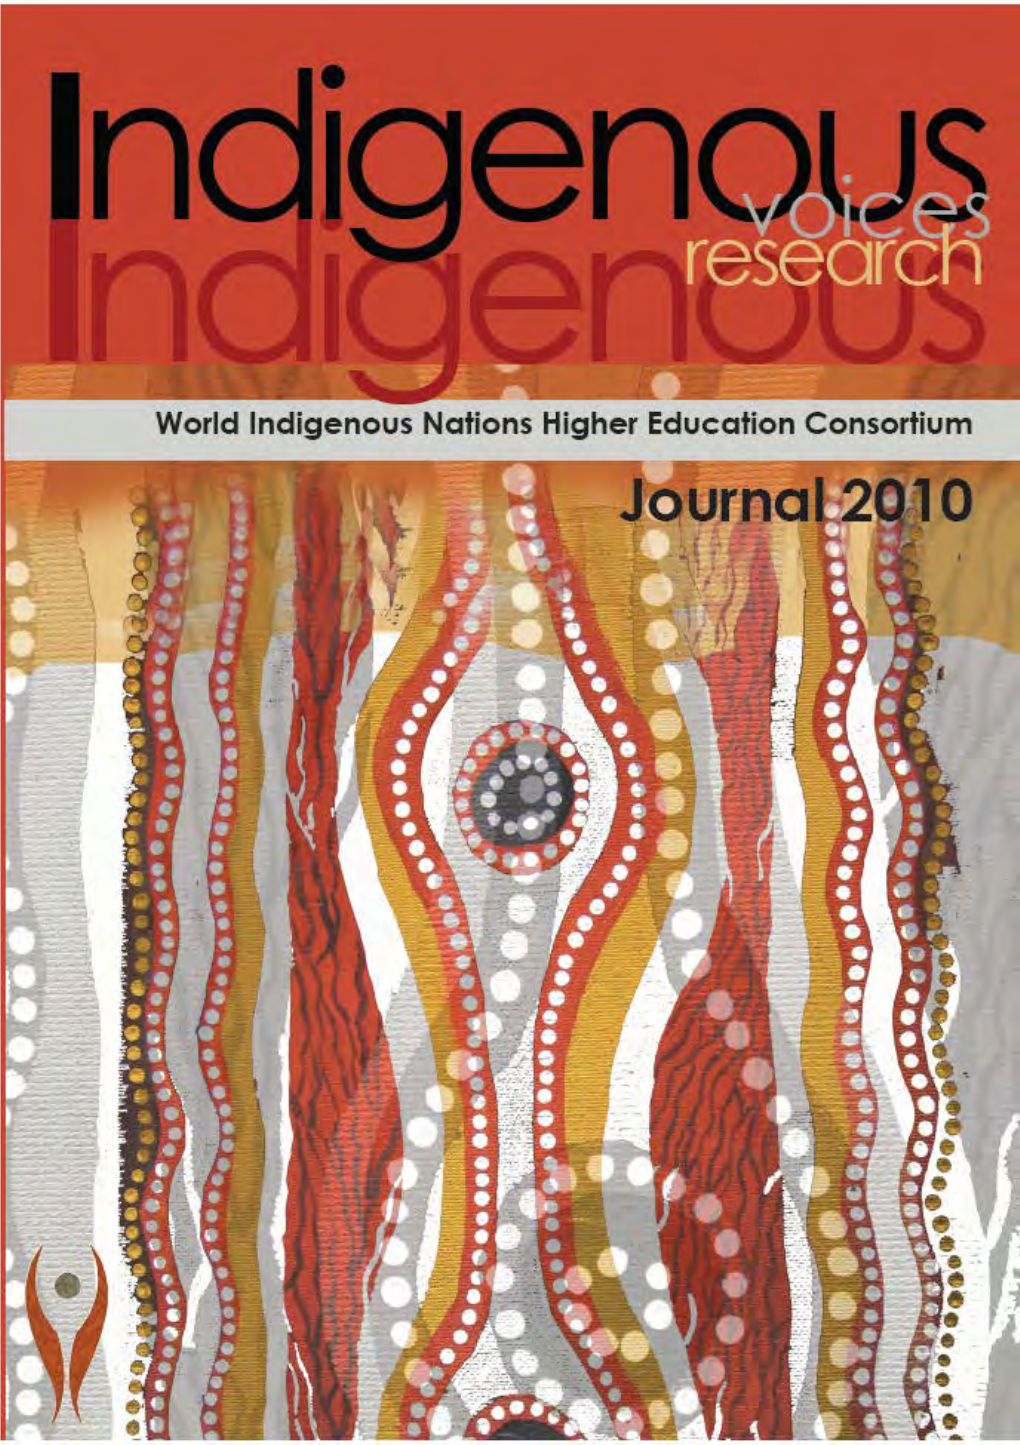 World Indigenous Nations Higher Education Consortium Journal 2010